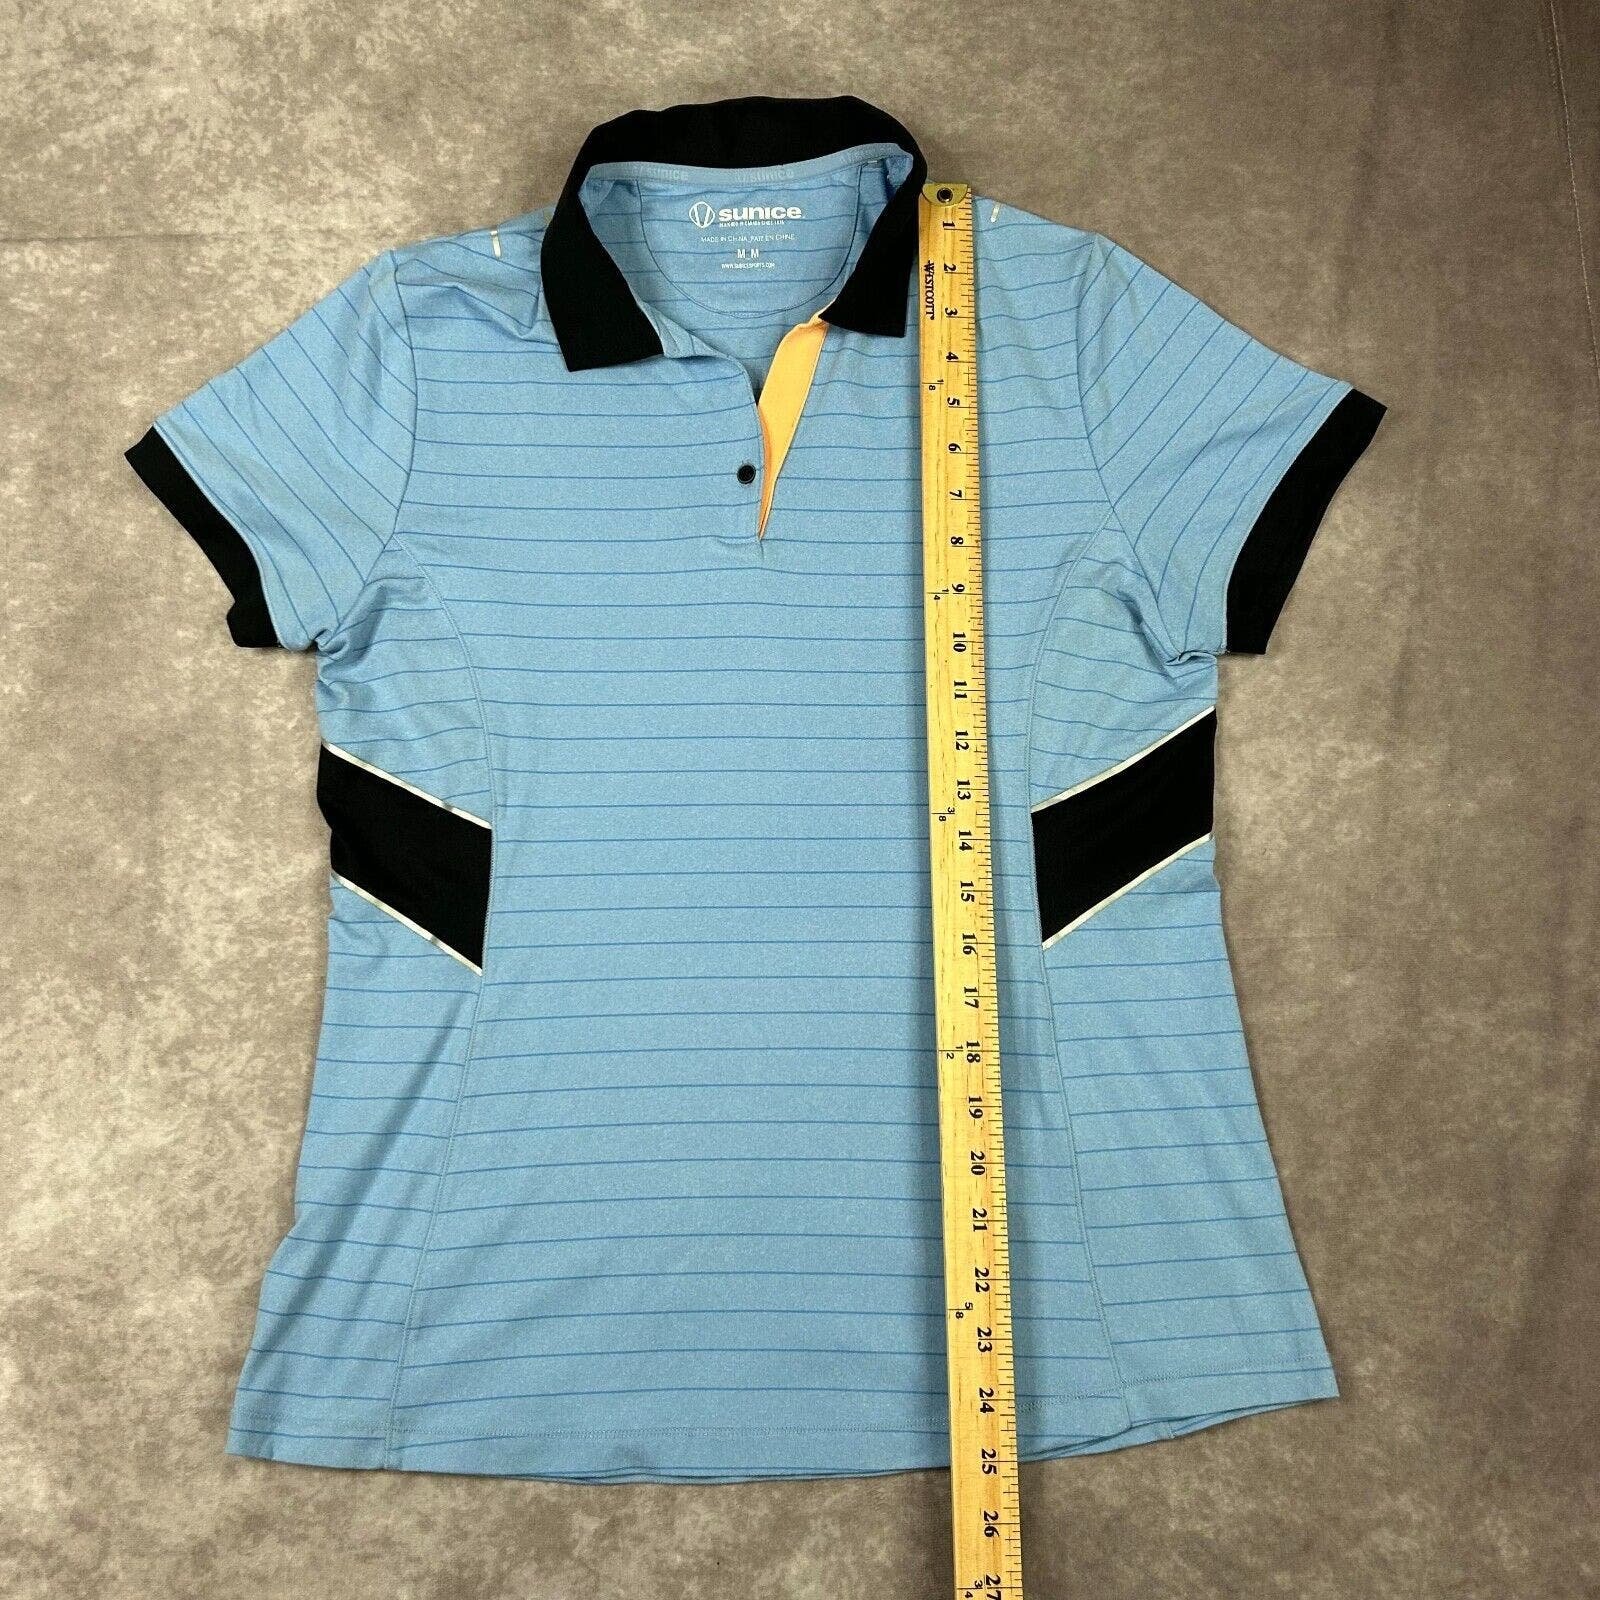 Authentic Sunice Coolite Womens Golf Polo Moisure Wicking Blue Size Medium mIIoMN31p Zero Profit 